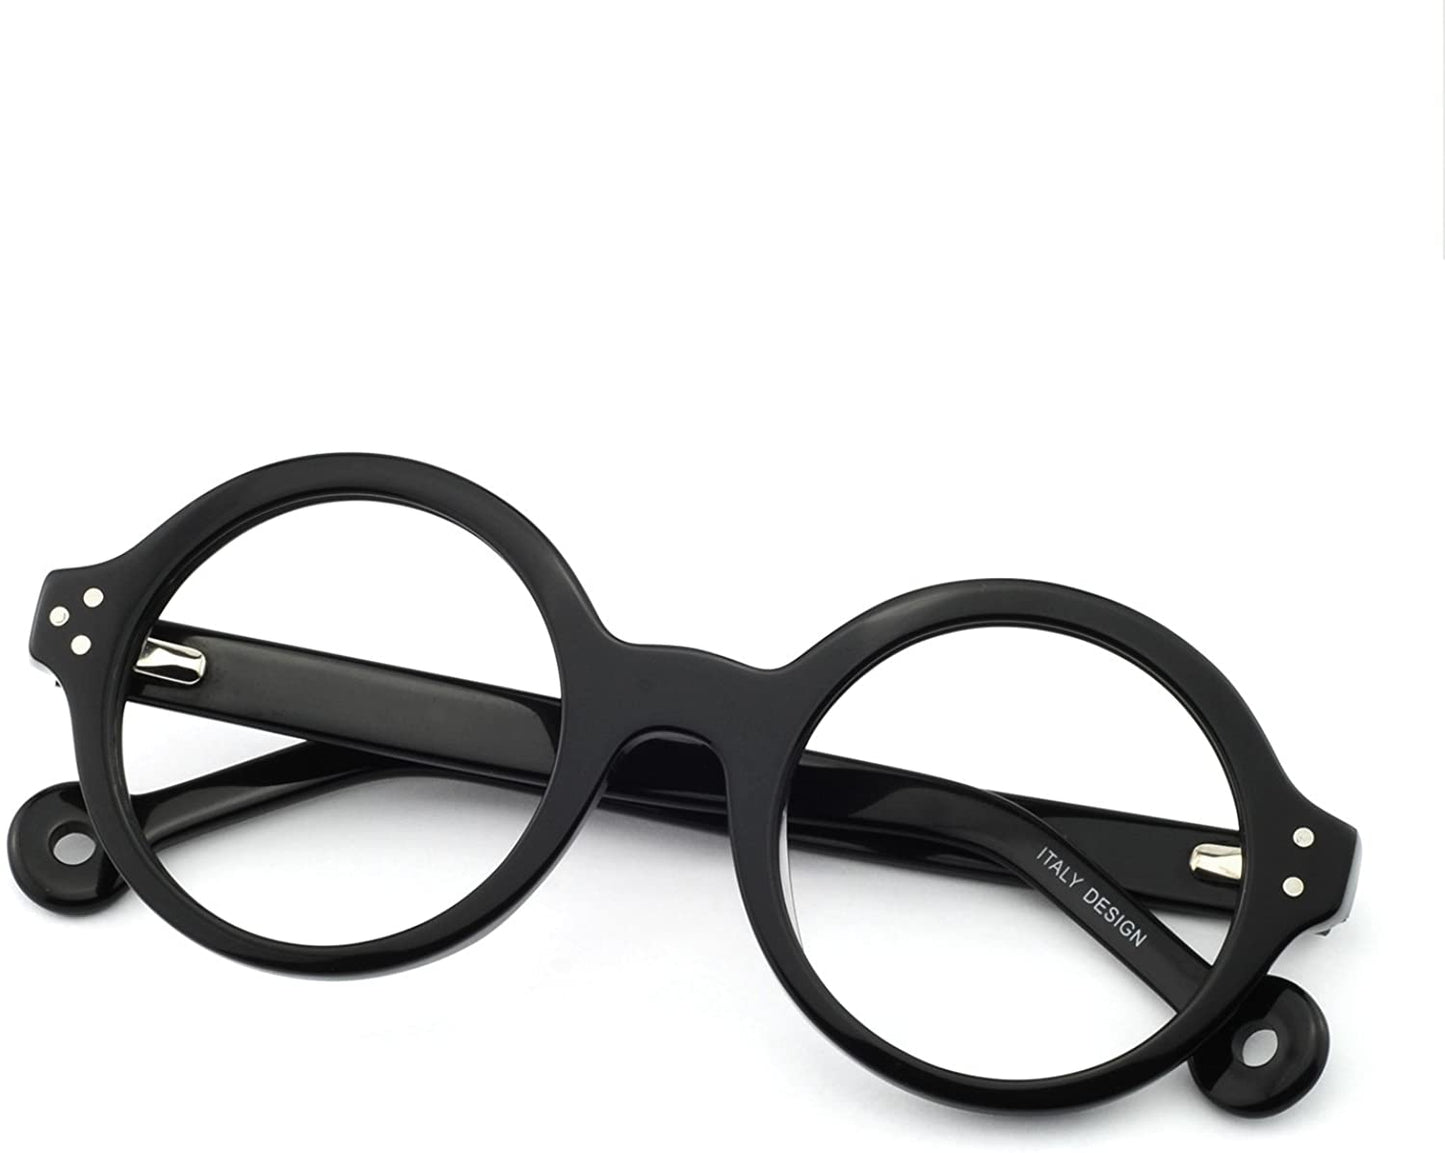 OCCI CHIARI Optical Eyewear Frame Nerd Glasses For Men Women with Clear Lens